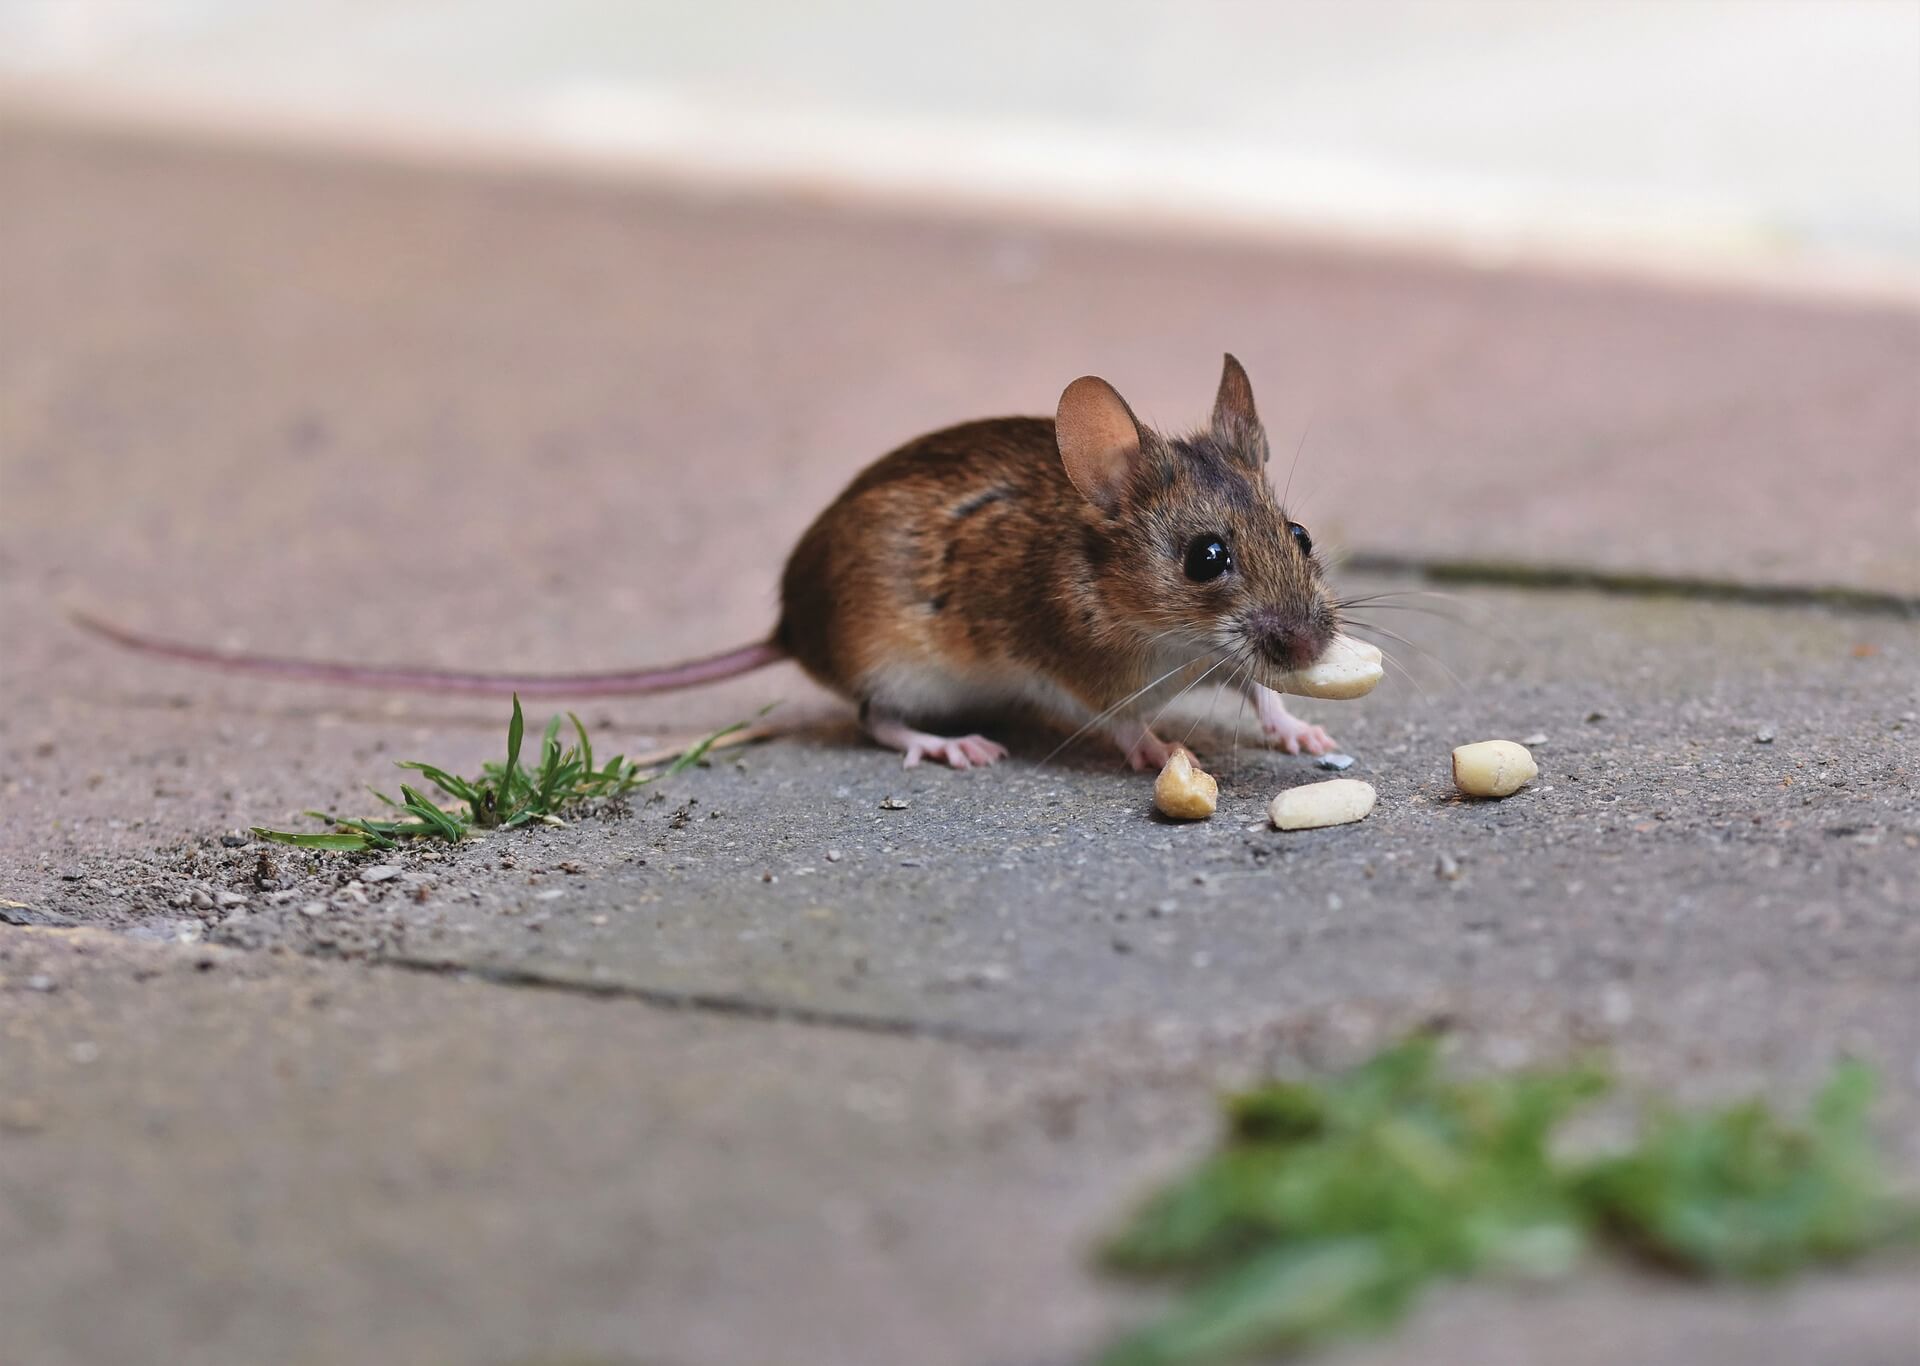 https://www.peta2.com/wp-content/uploads/2023/02/mouse-on-a-sidewalk-eating-peanuts.jpg